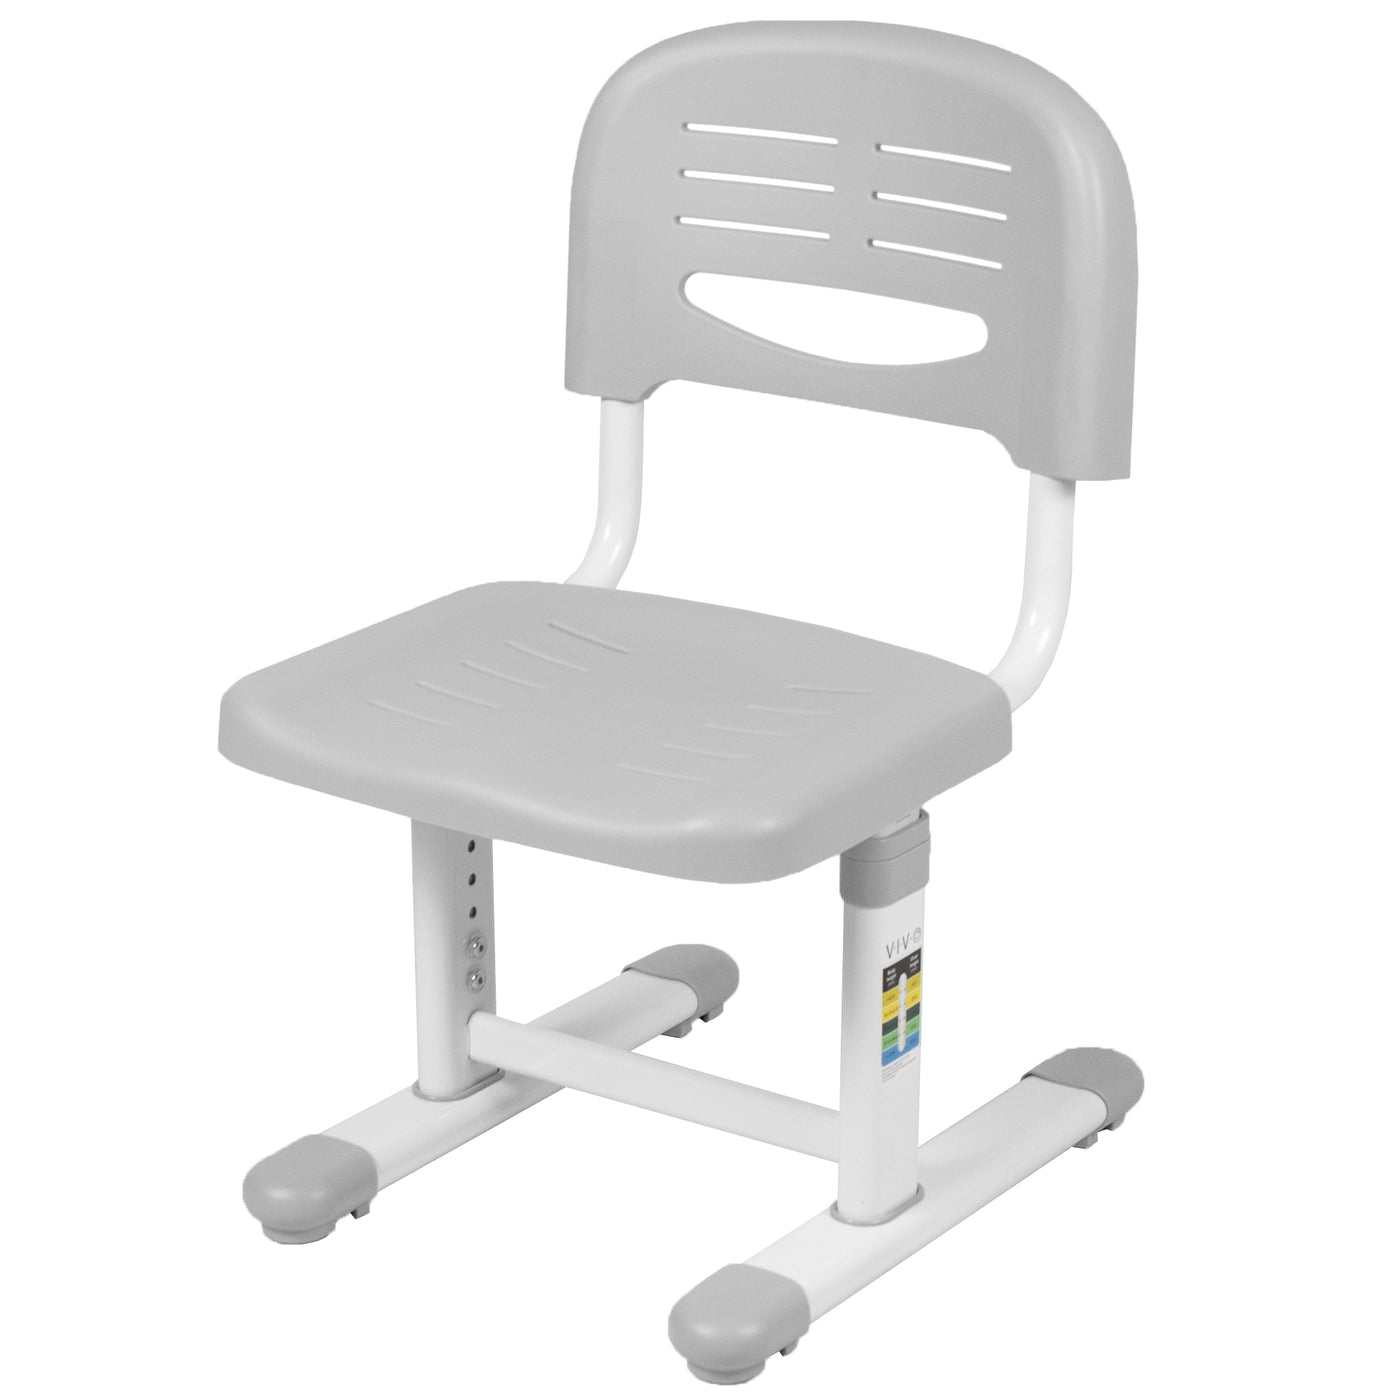 Height adjustable kids' chair